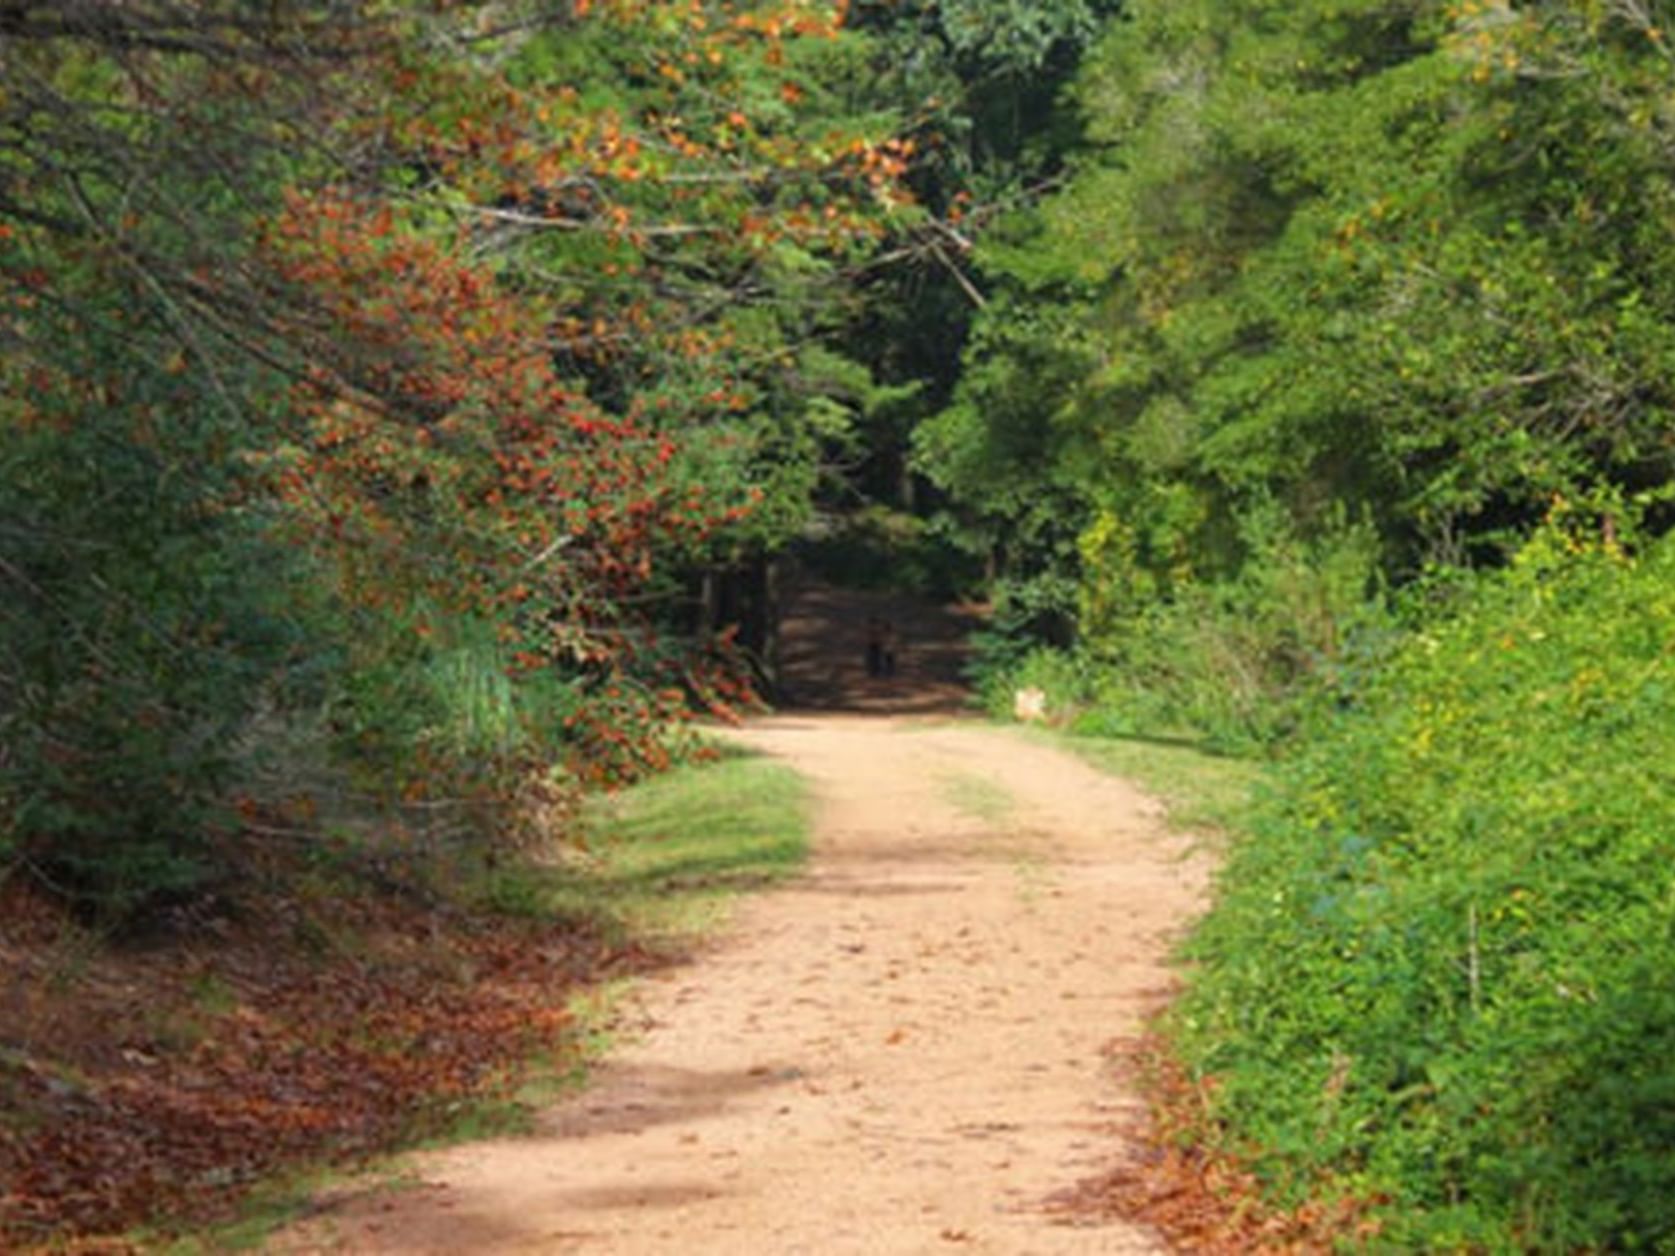 A pathway in Arboretum Lussich near Grand Hotel Punta del Este